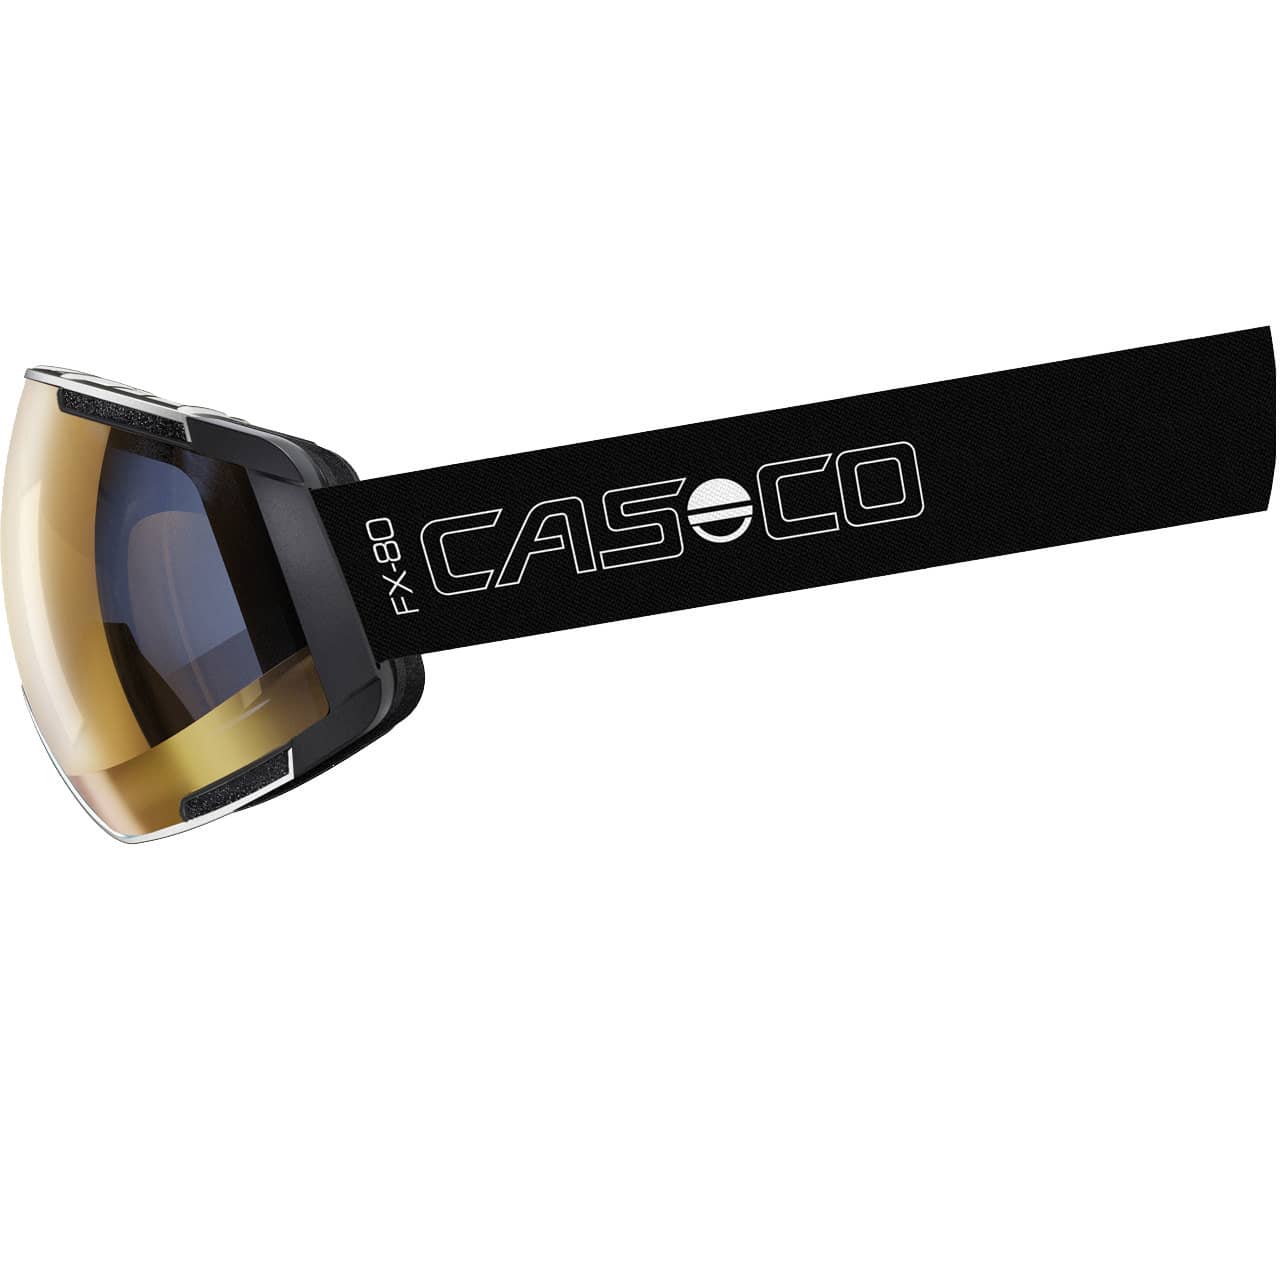 Casco FX-80 Strap Vautron+ silver von Casco